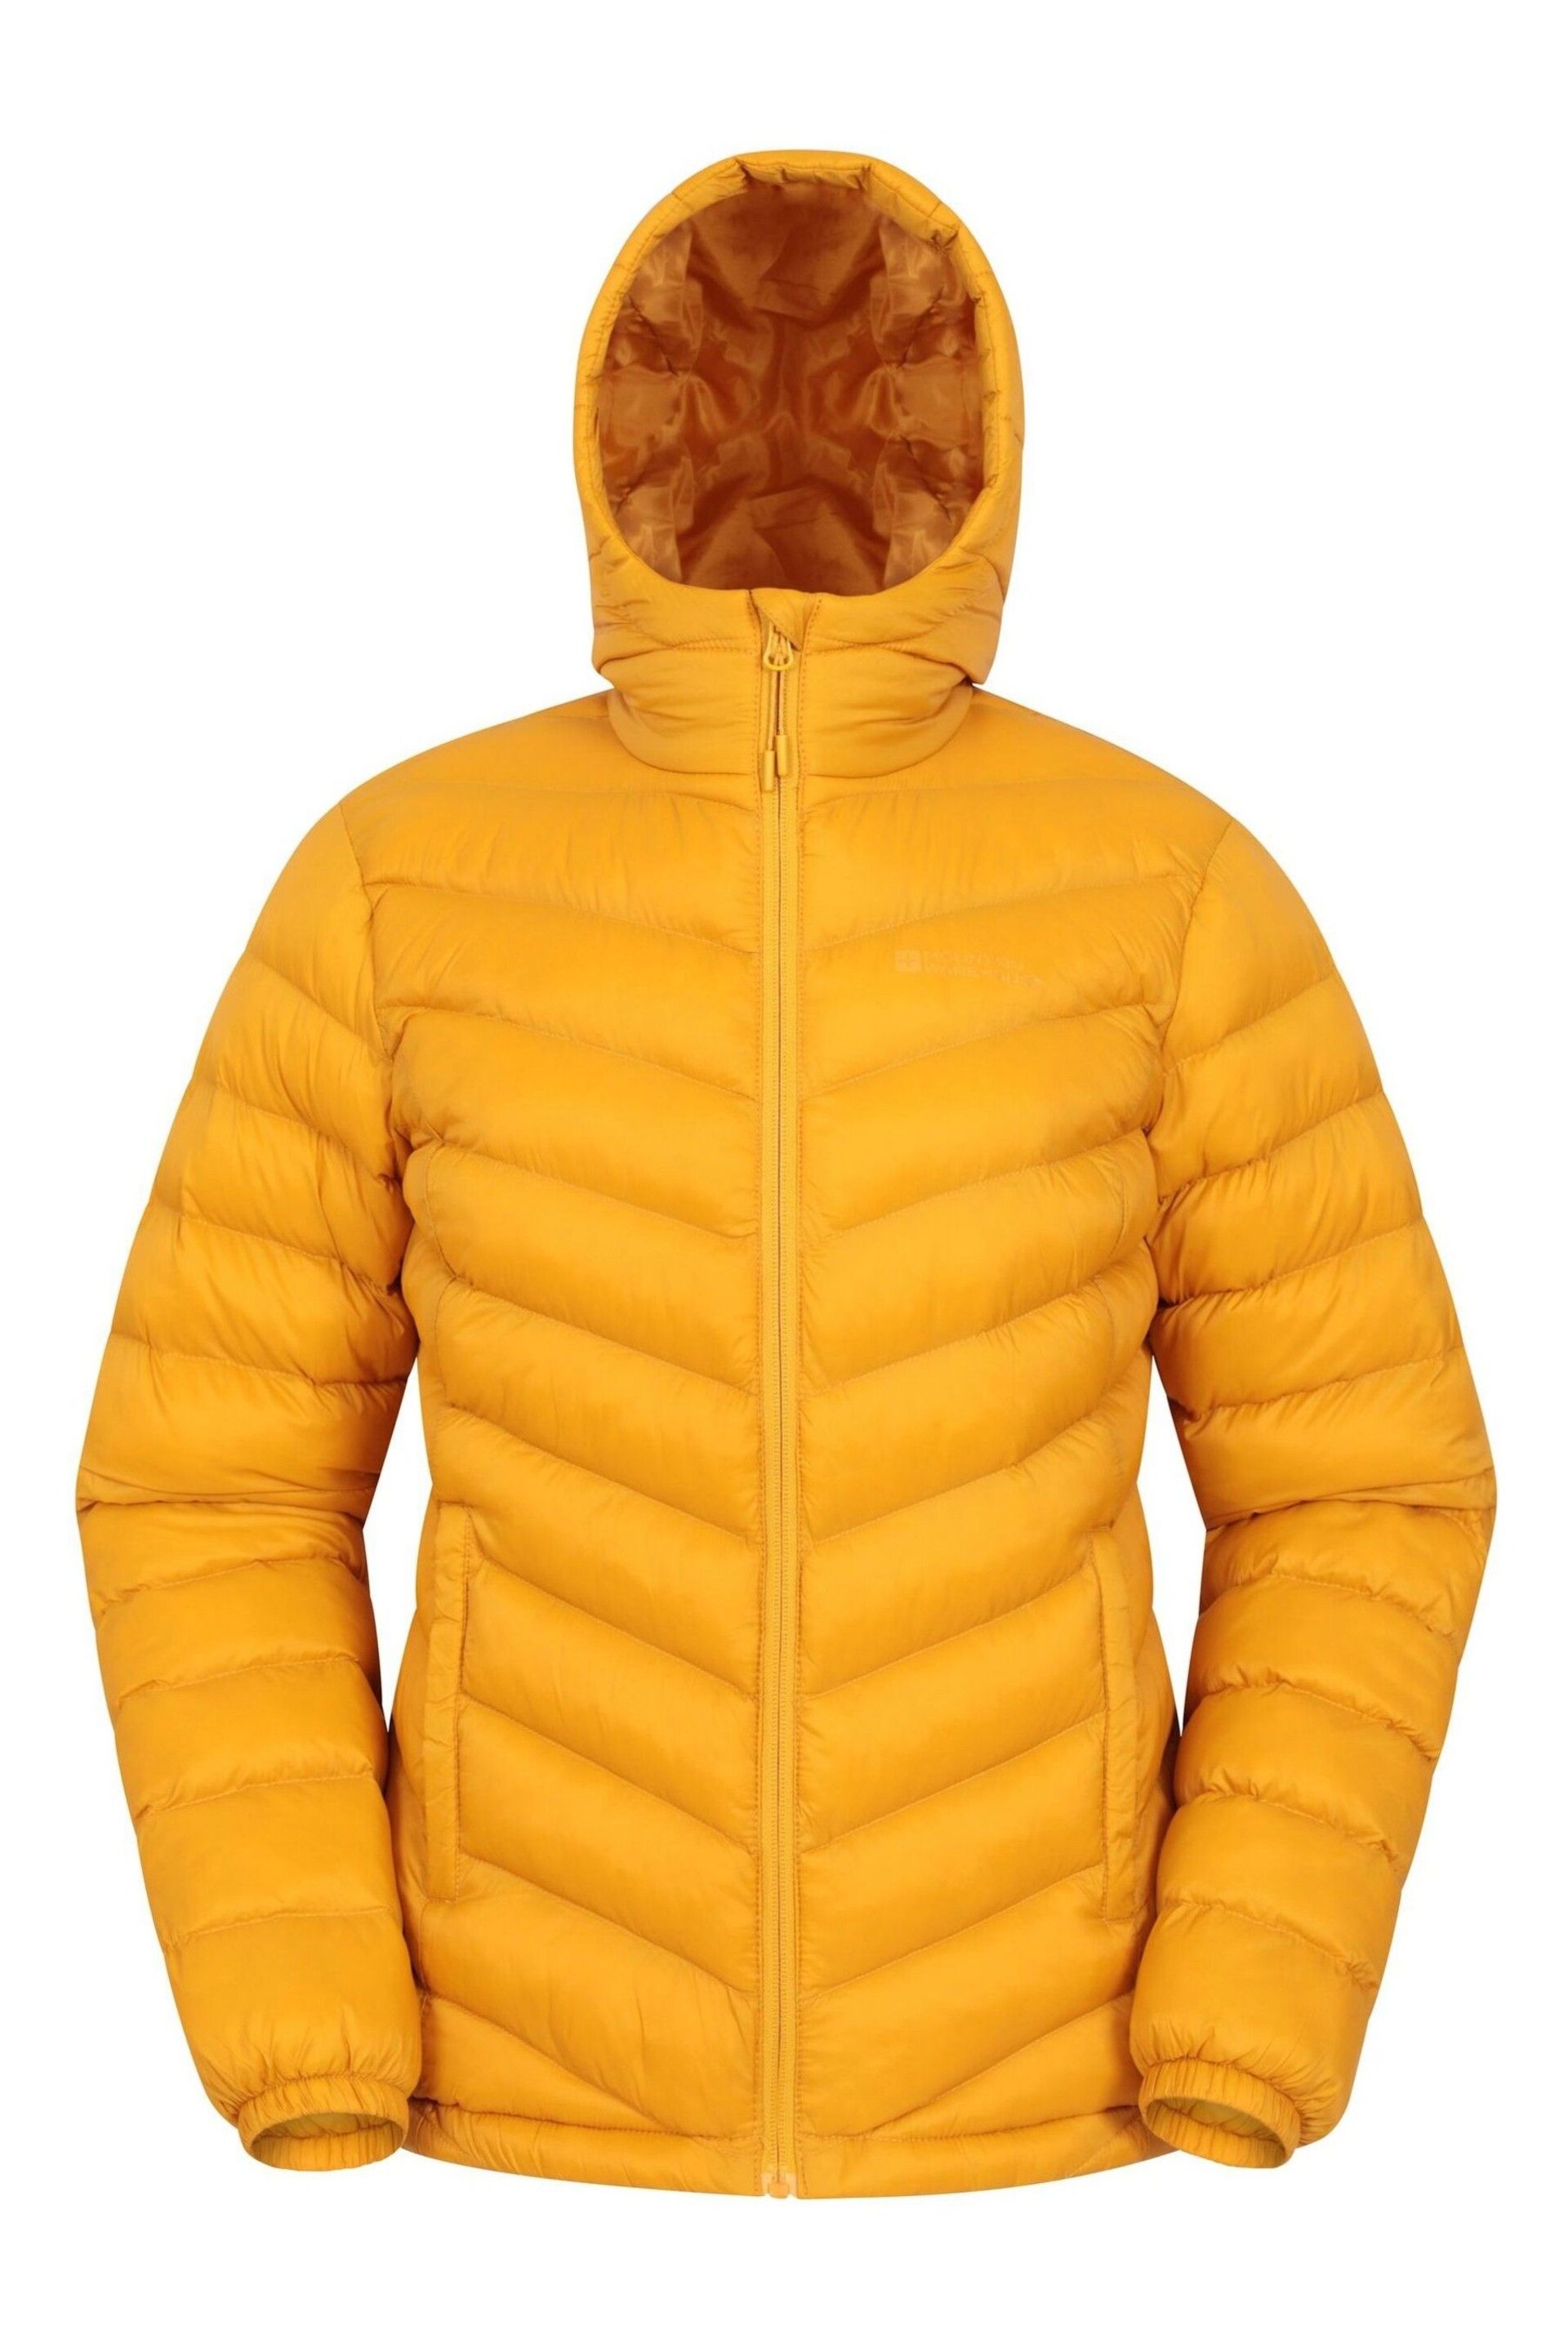 Mountain Warehouse Yellow Womens Seasons Water Resistant Padded Jacket - Image 4 of 7